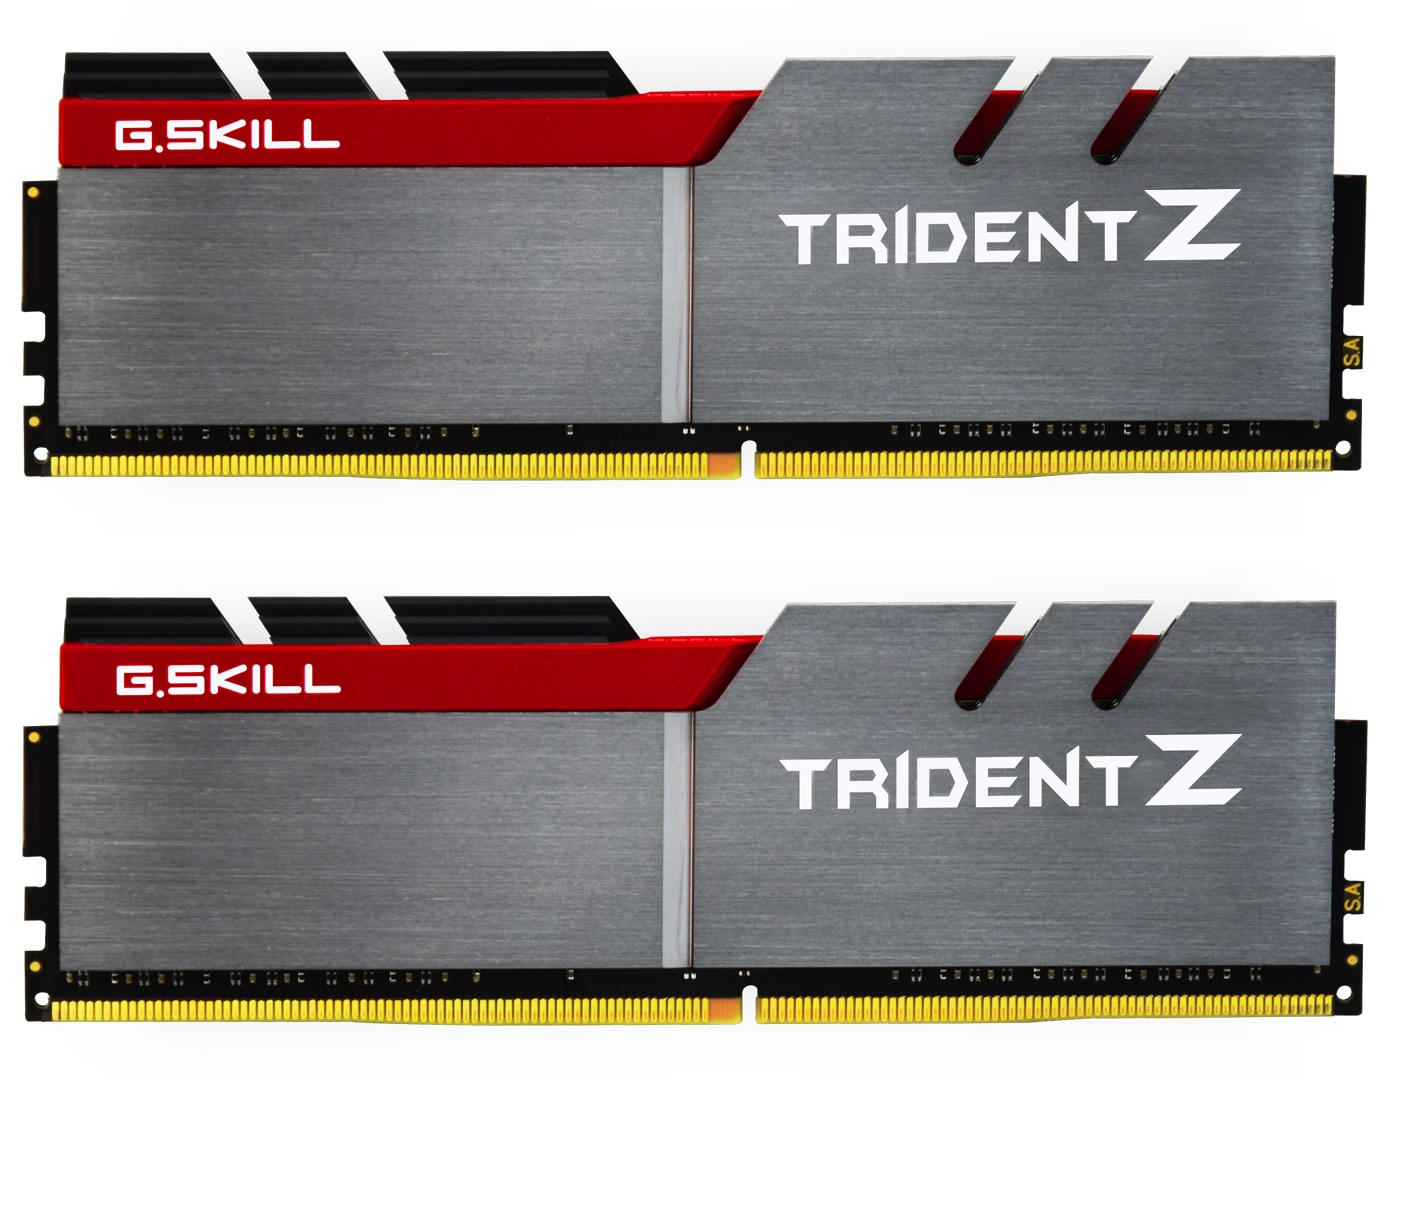 G.Skill Trident Z 16GB DDR4-3200 kit